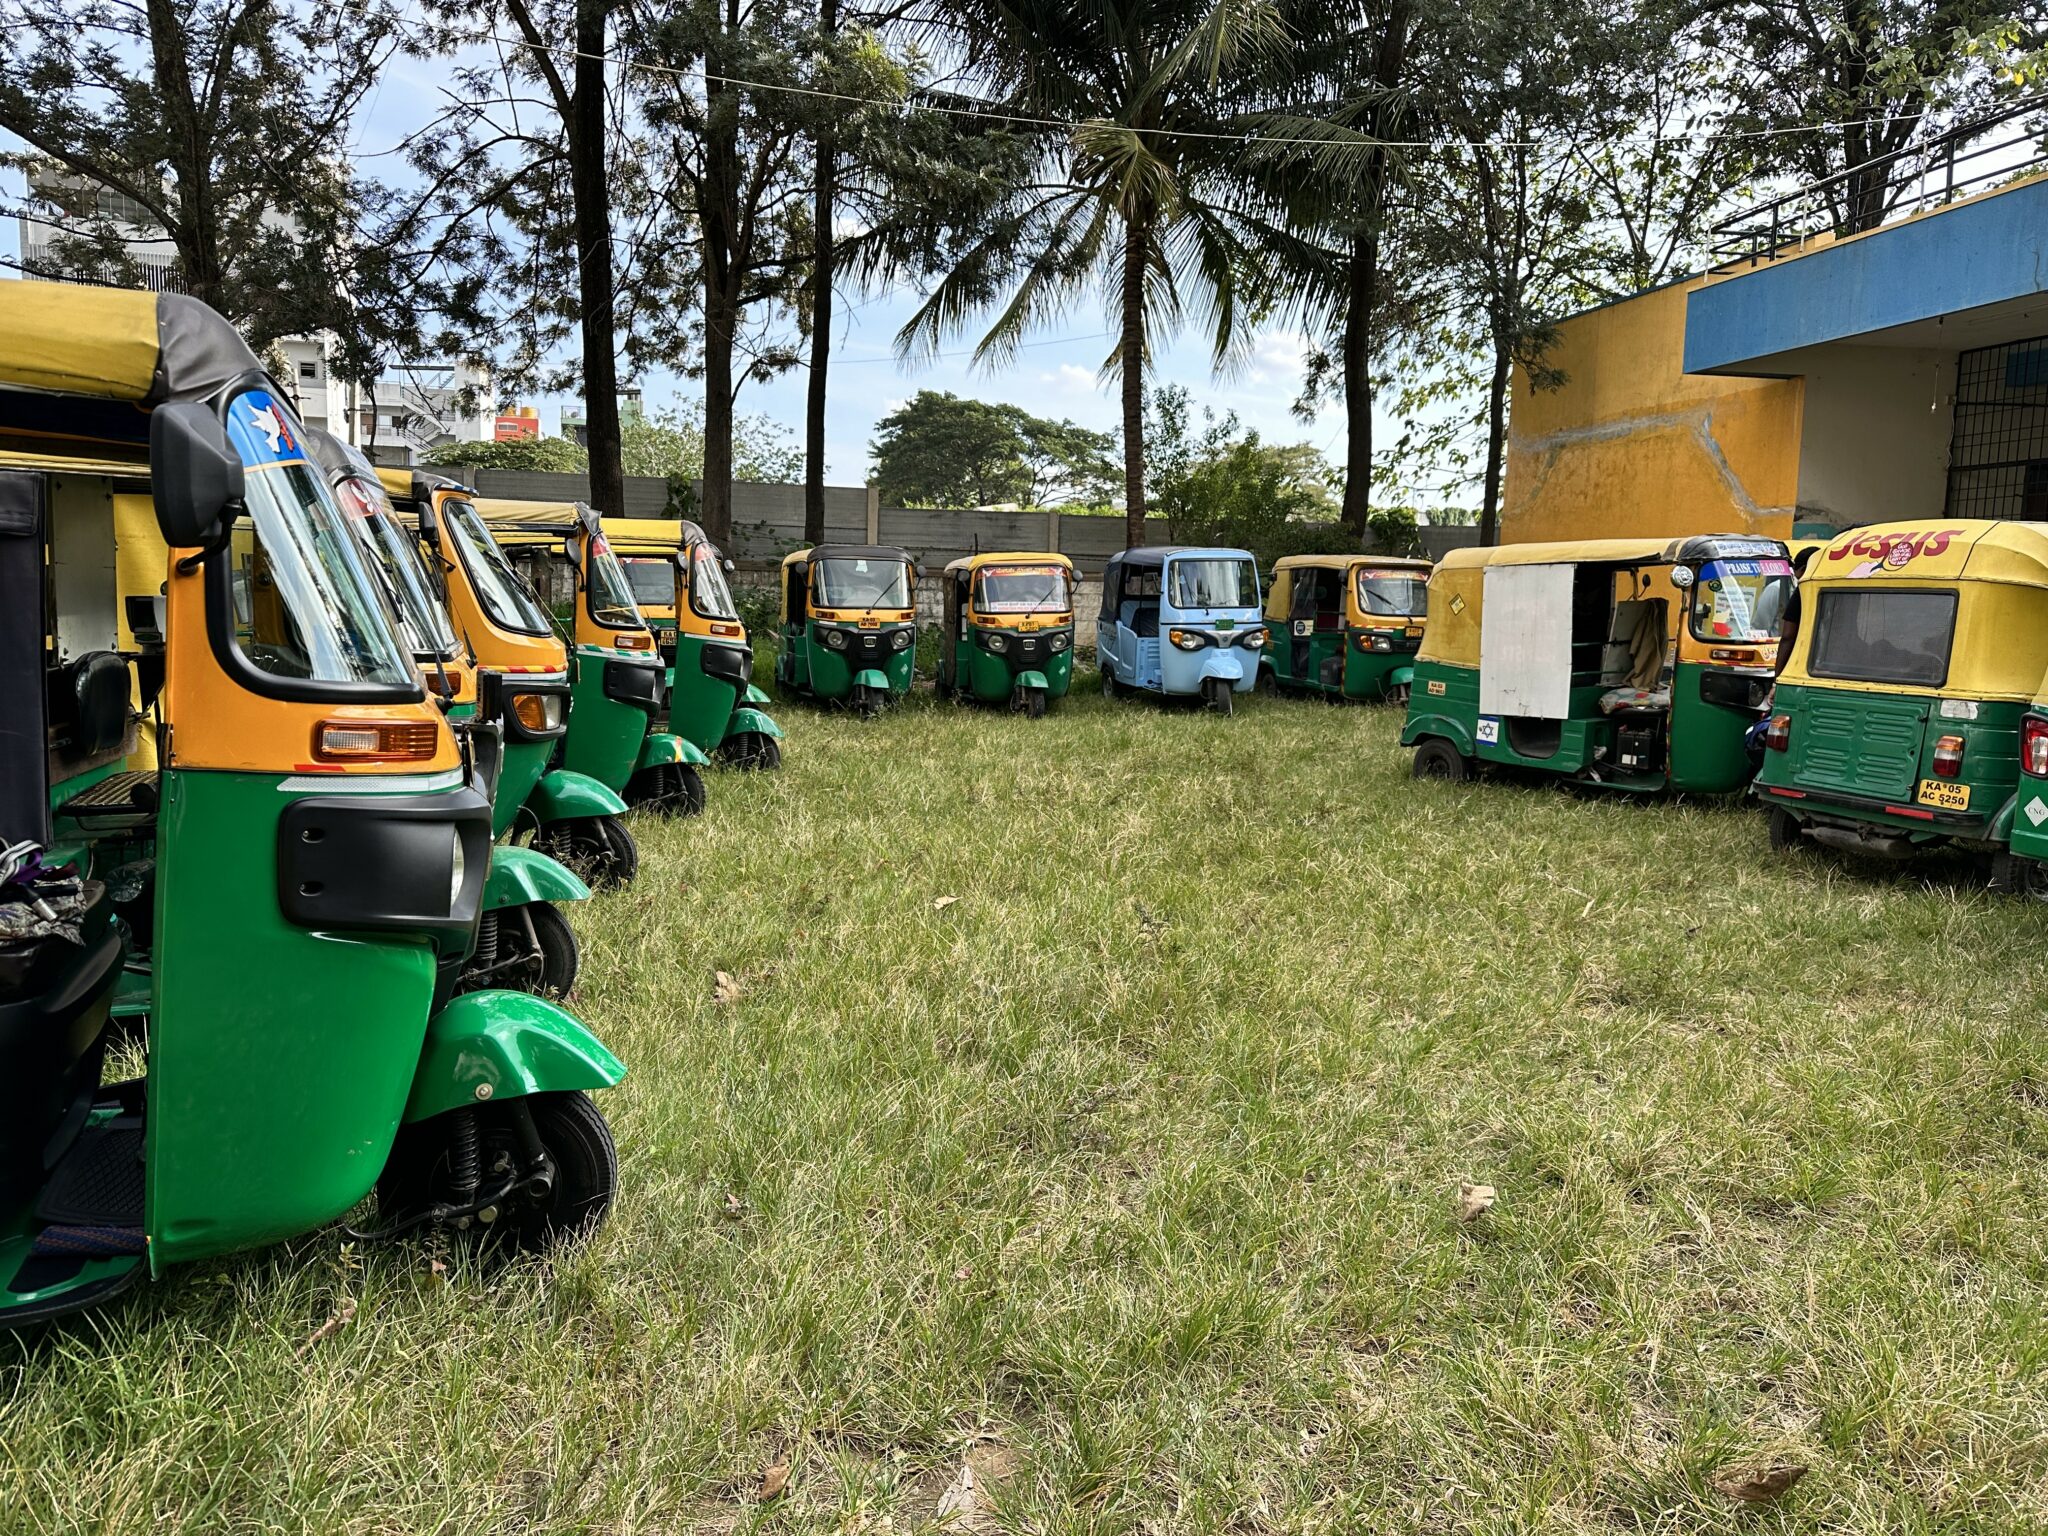 auto-rickshaws parked on a grassy field